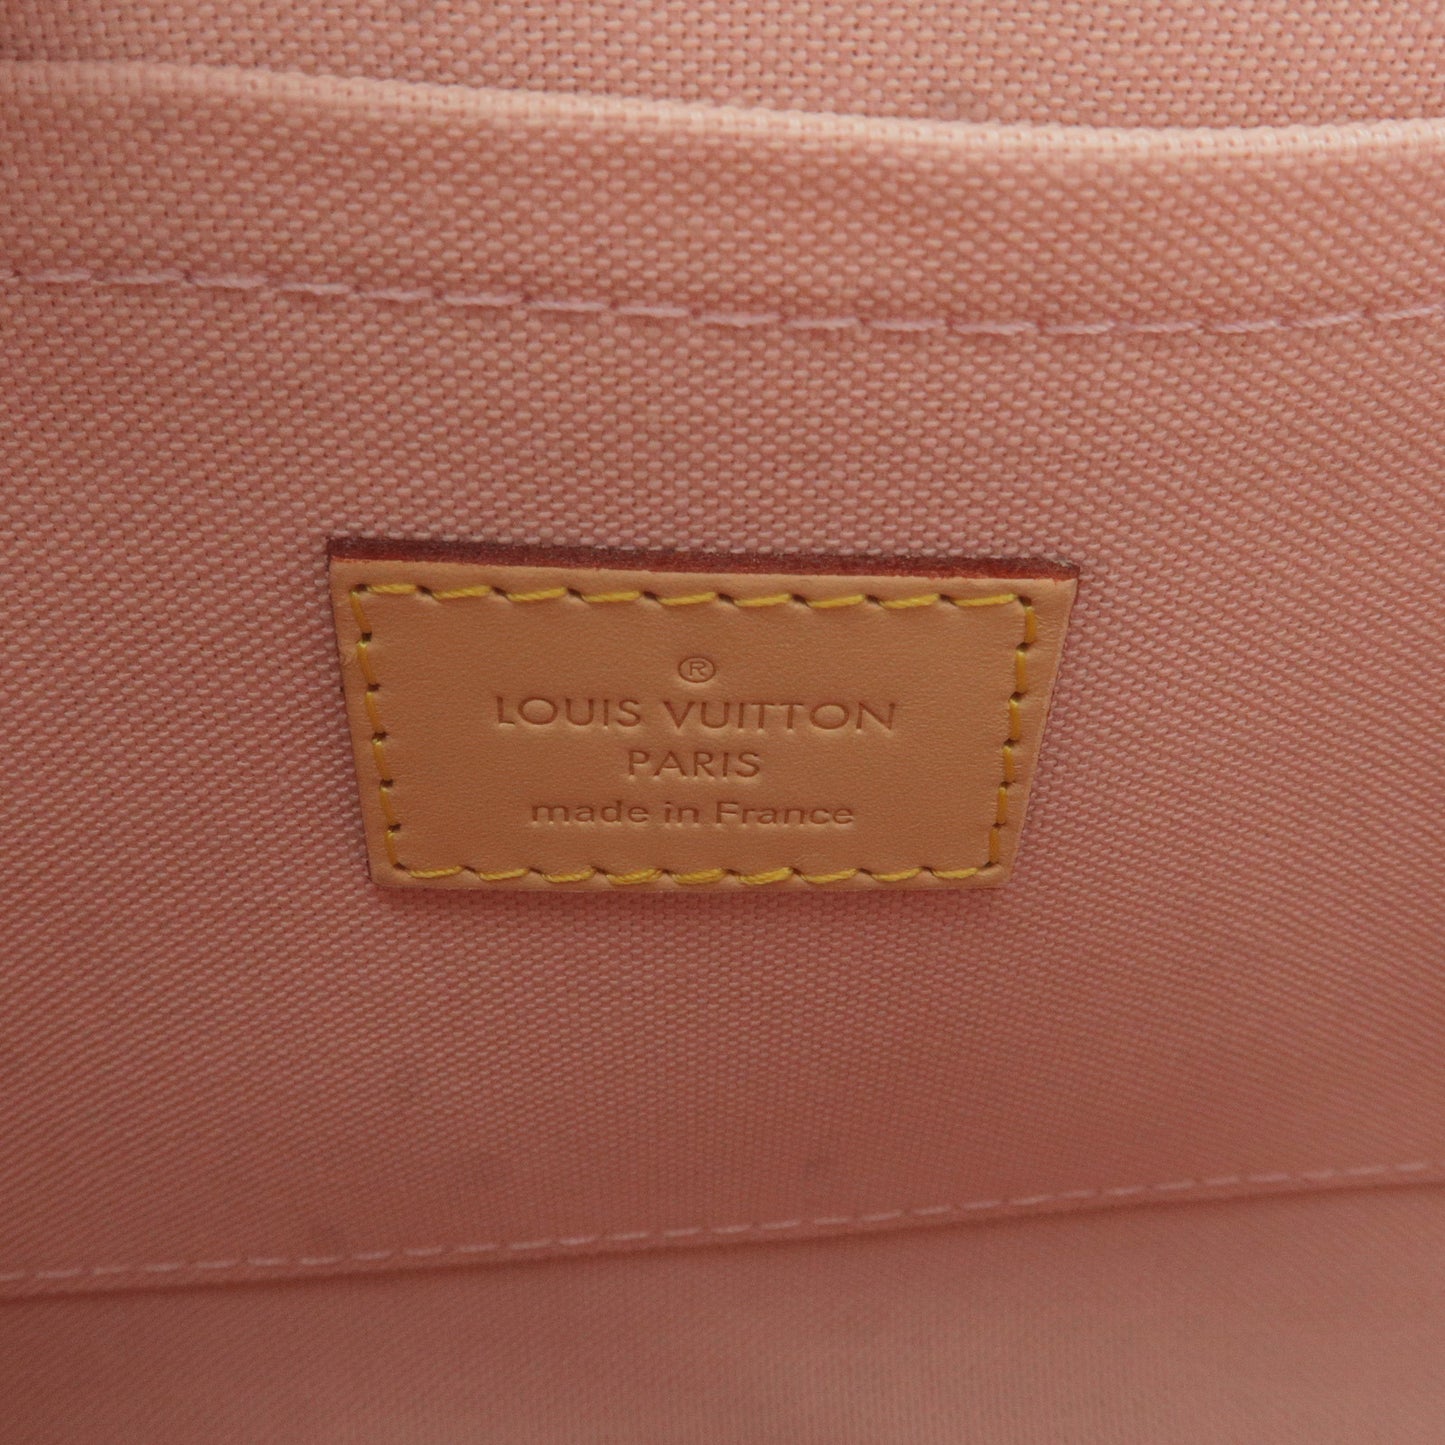 Louis - Bag - Damier - Hand - 2Way - Bag - N41581 – dct - Vuitton